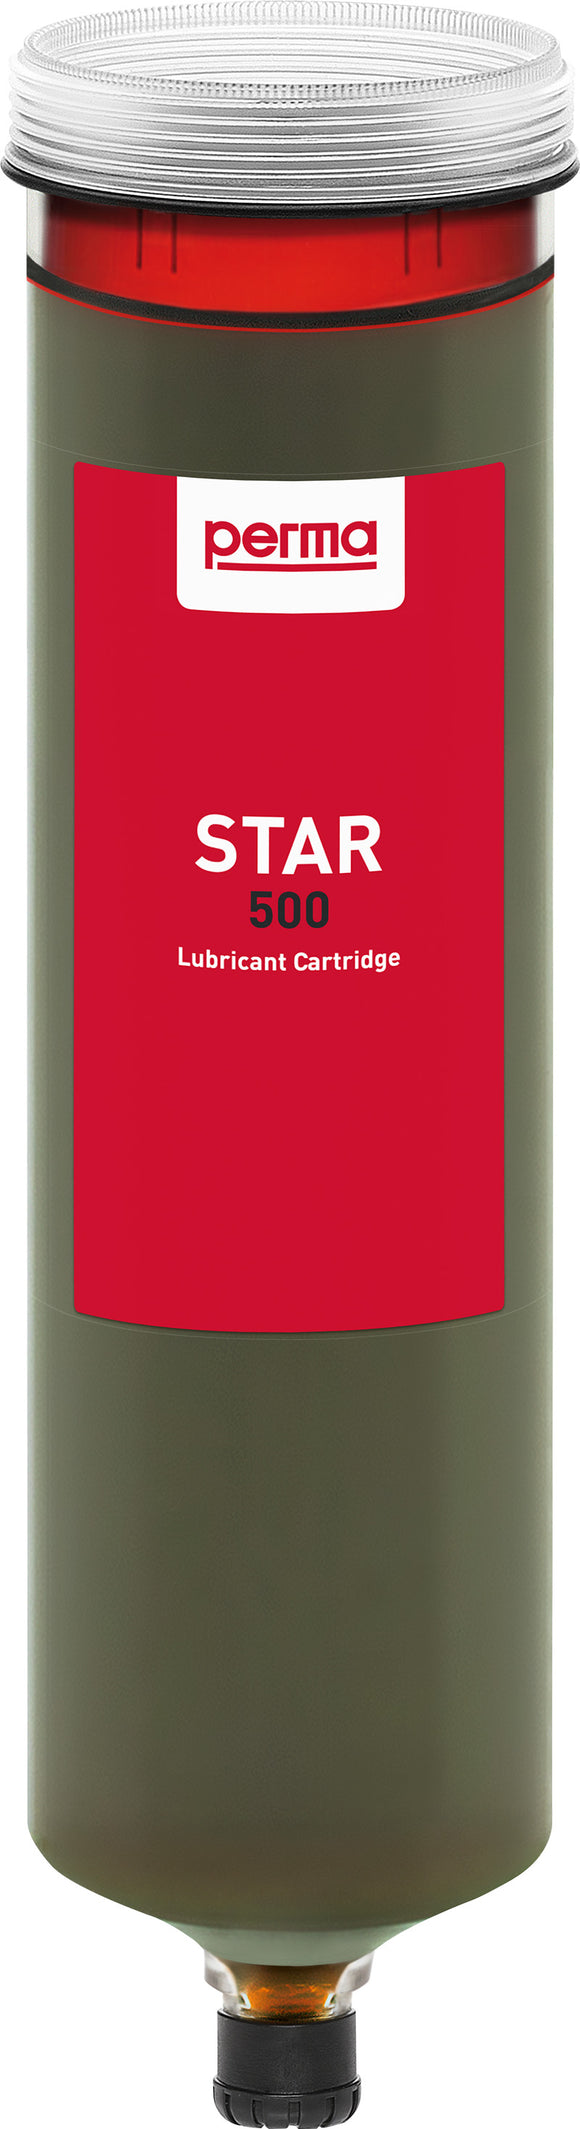 Perma Star LC 500 with Perma Multipurpose bio Grease SF09